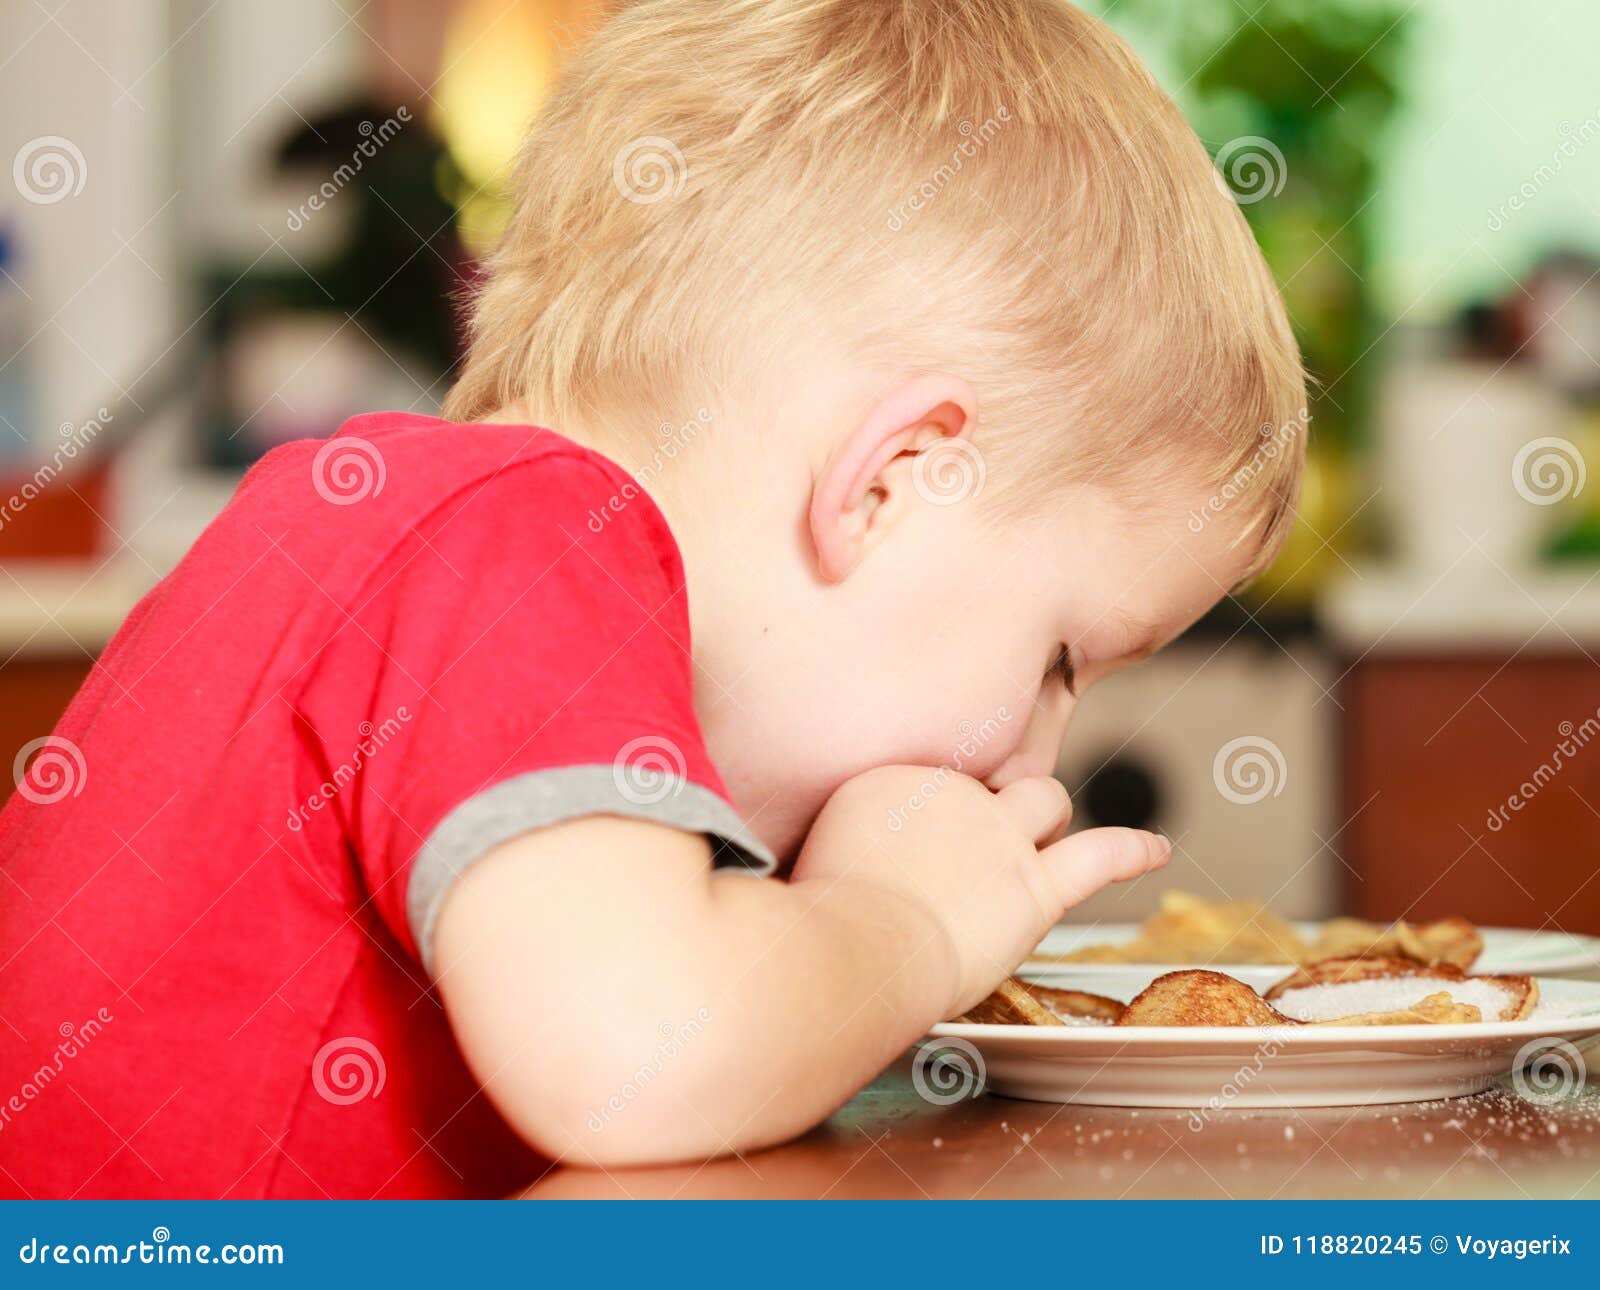 Little Boy Eating Pancakes For Breaktfast Stock Image Image Of Child